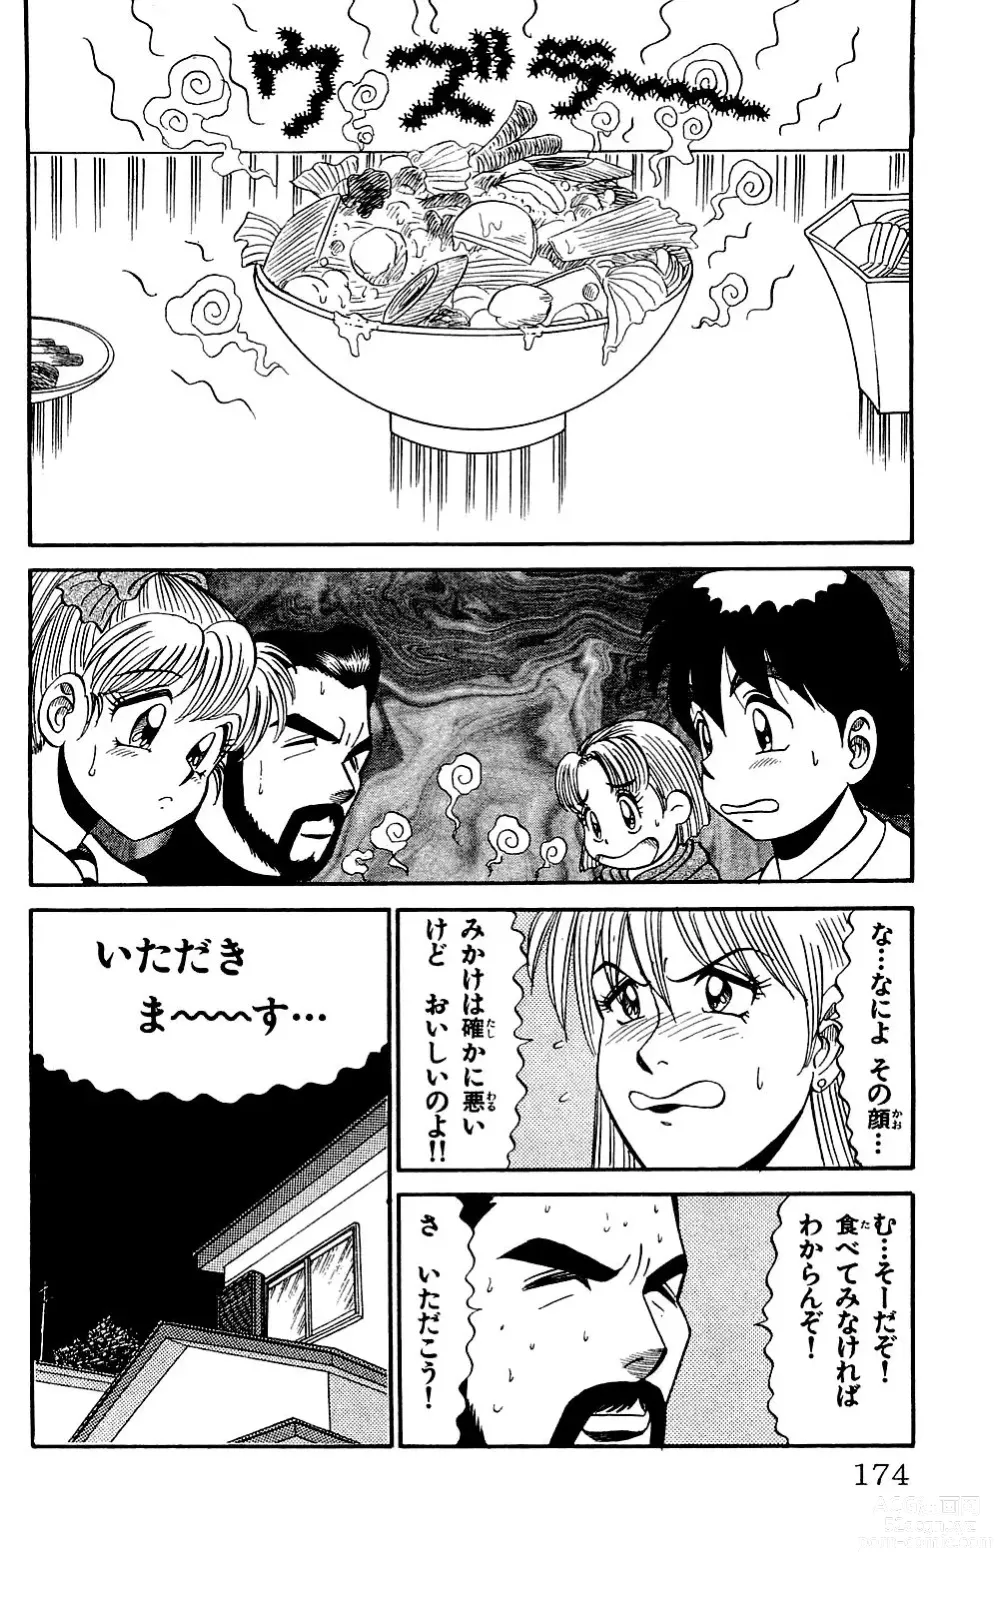 Page 172 of manga Orette Piyoritan Vol. 2